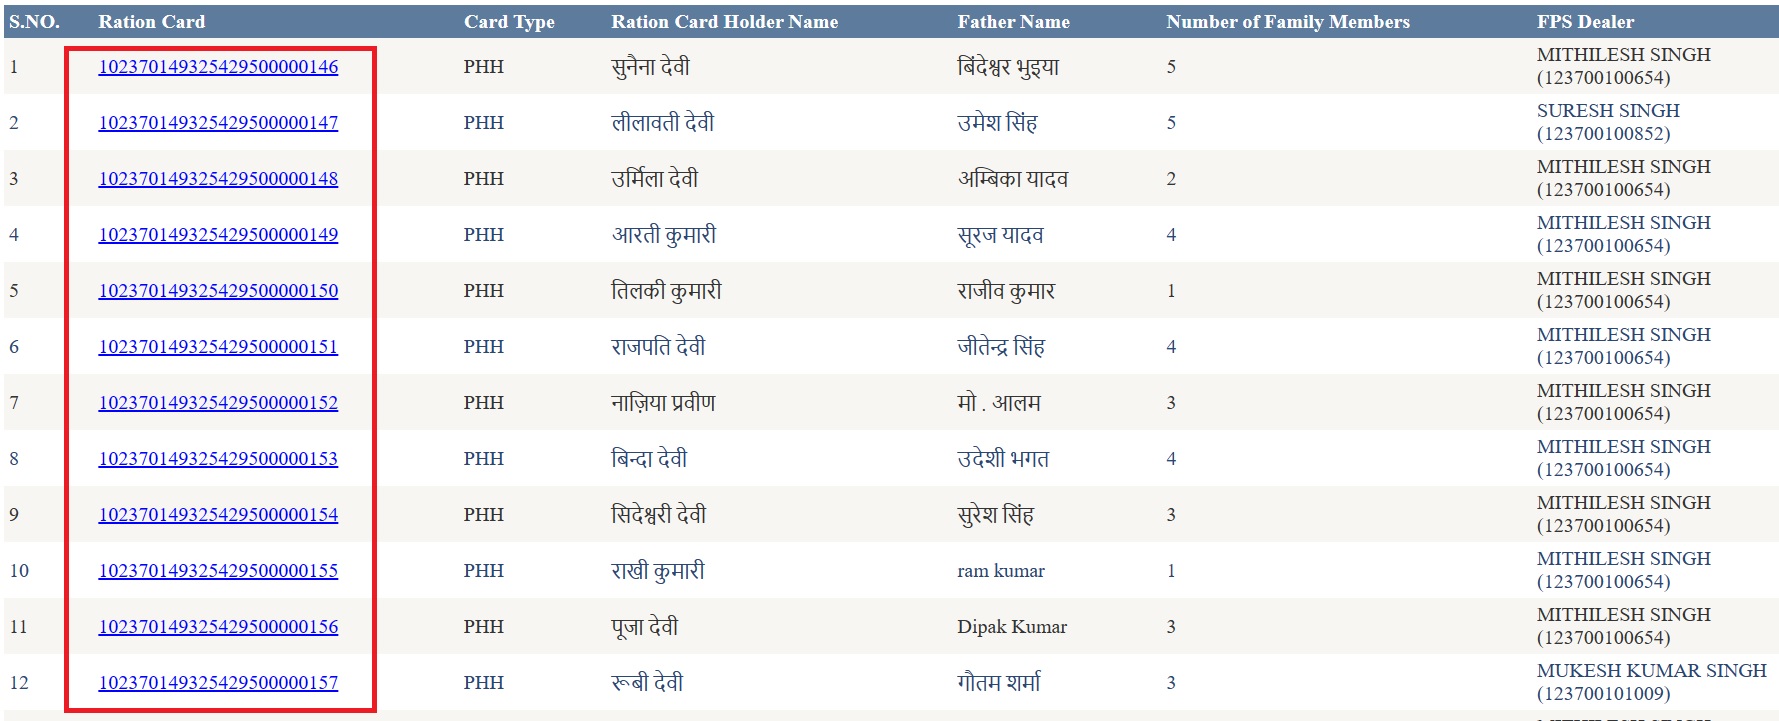 Ration card holders list